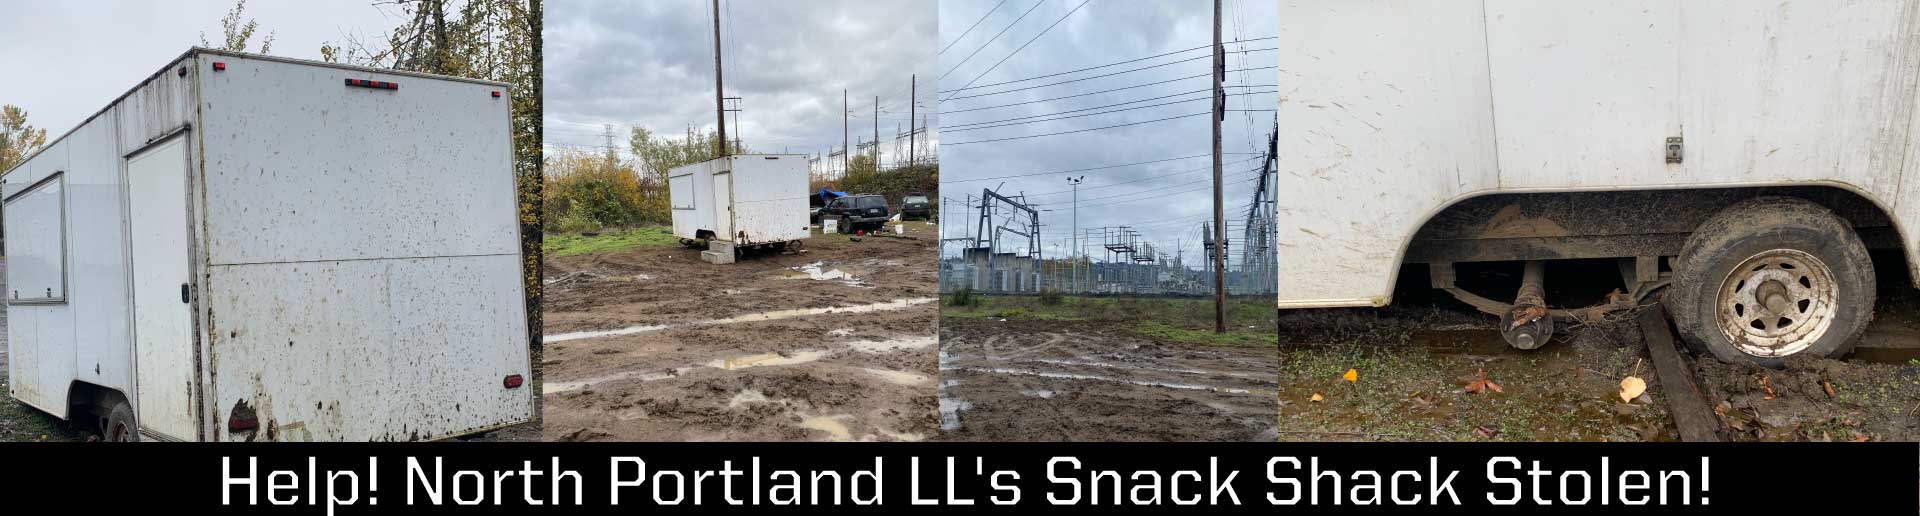 Help! North Portland LL's Snack Shack Stolen!